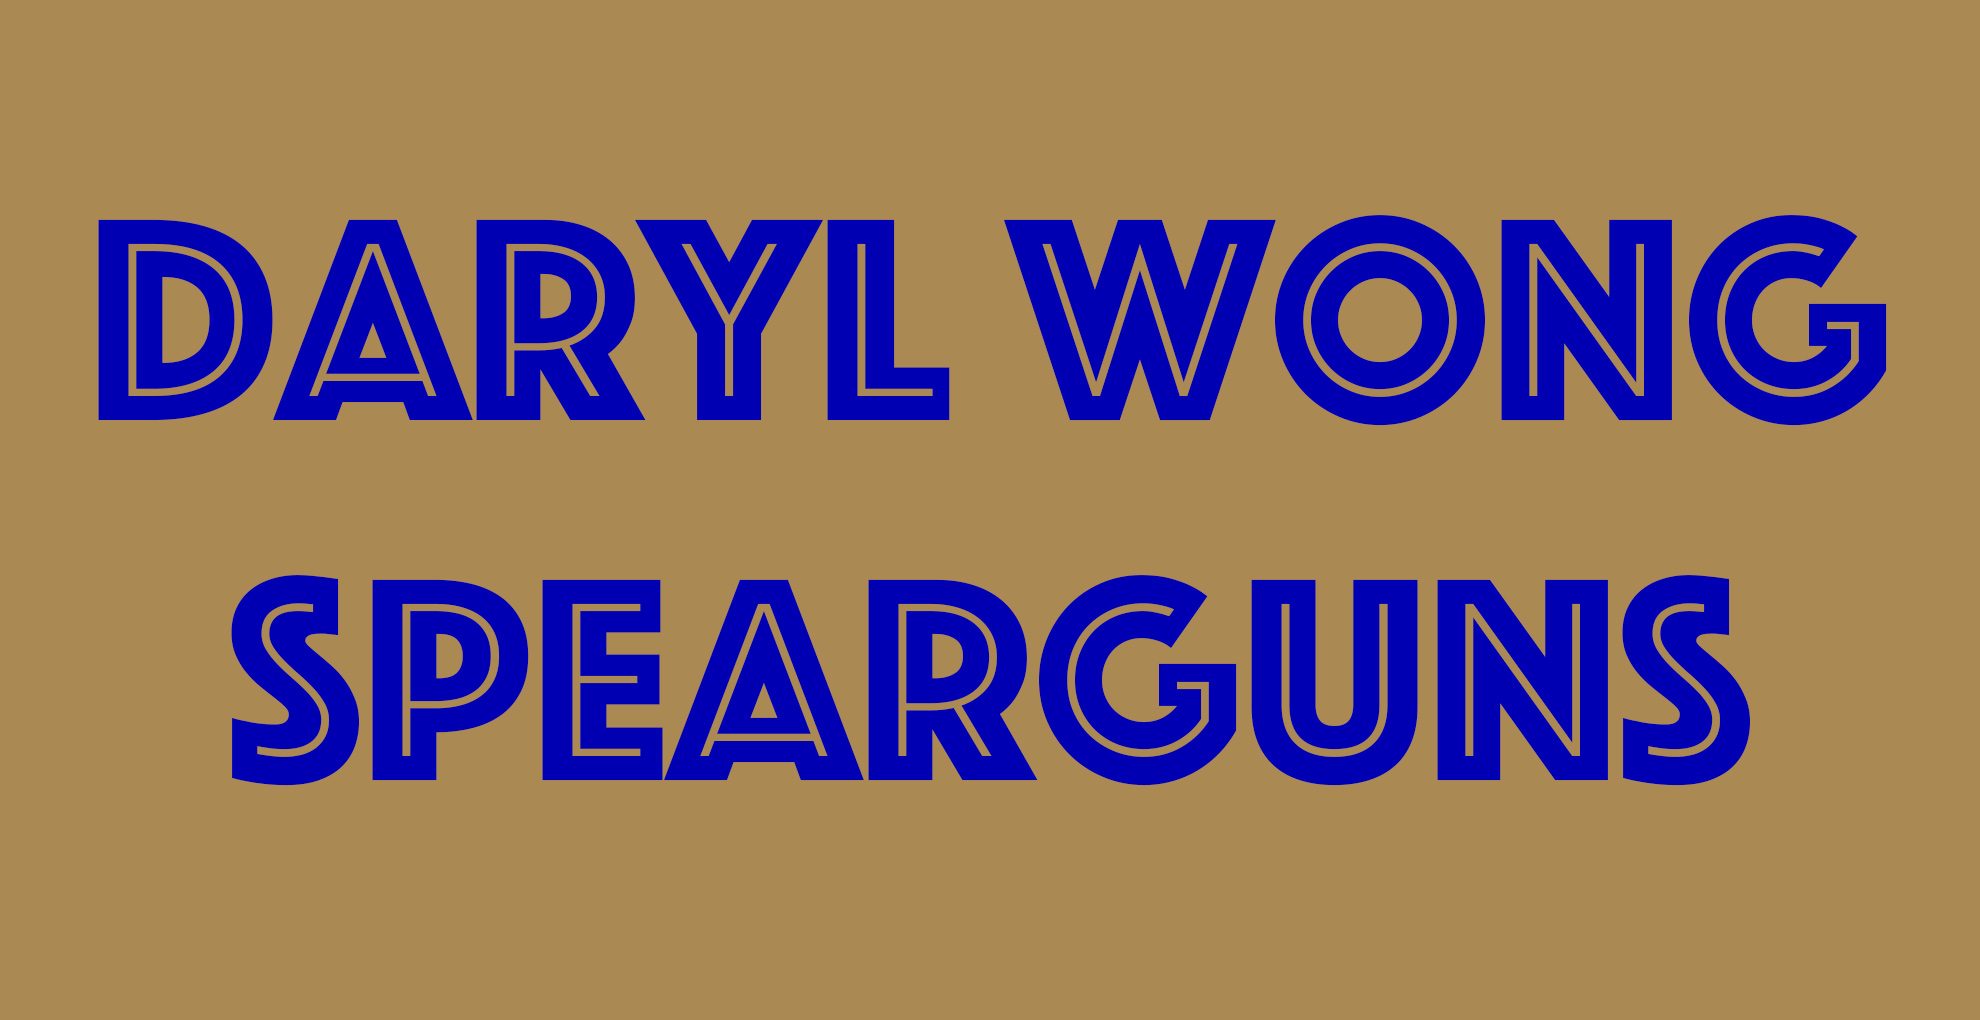 Daryl Wong Spearguns